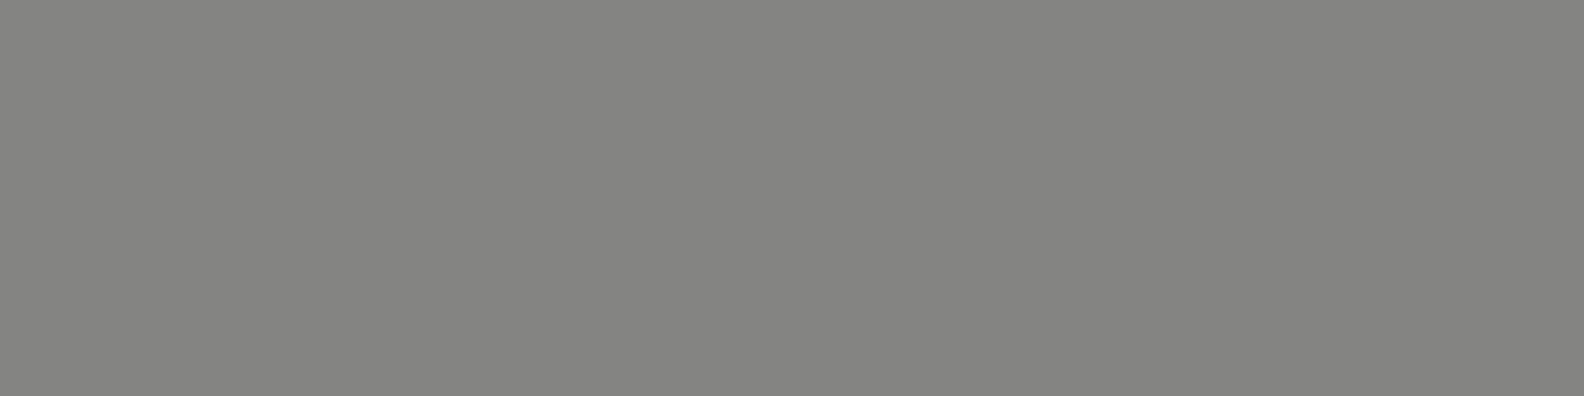 1584x396 Battleship Grey Solid Color Background